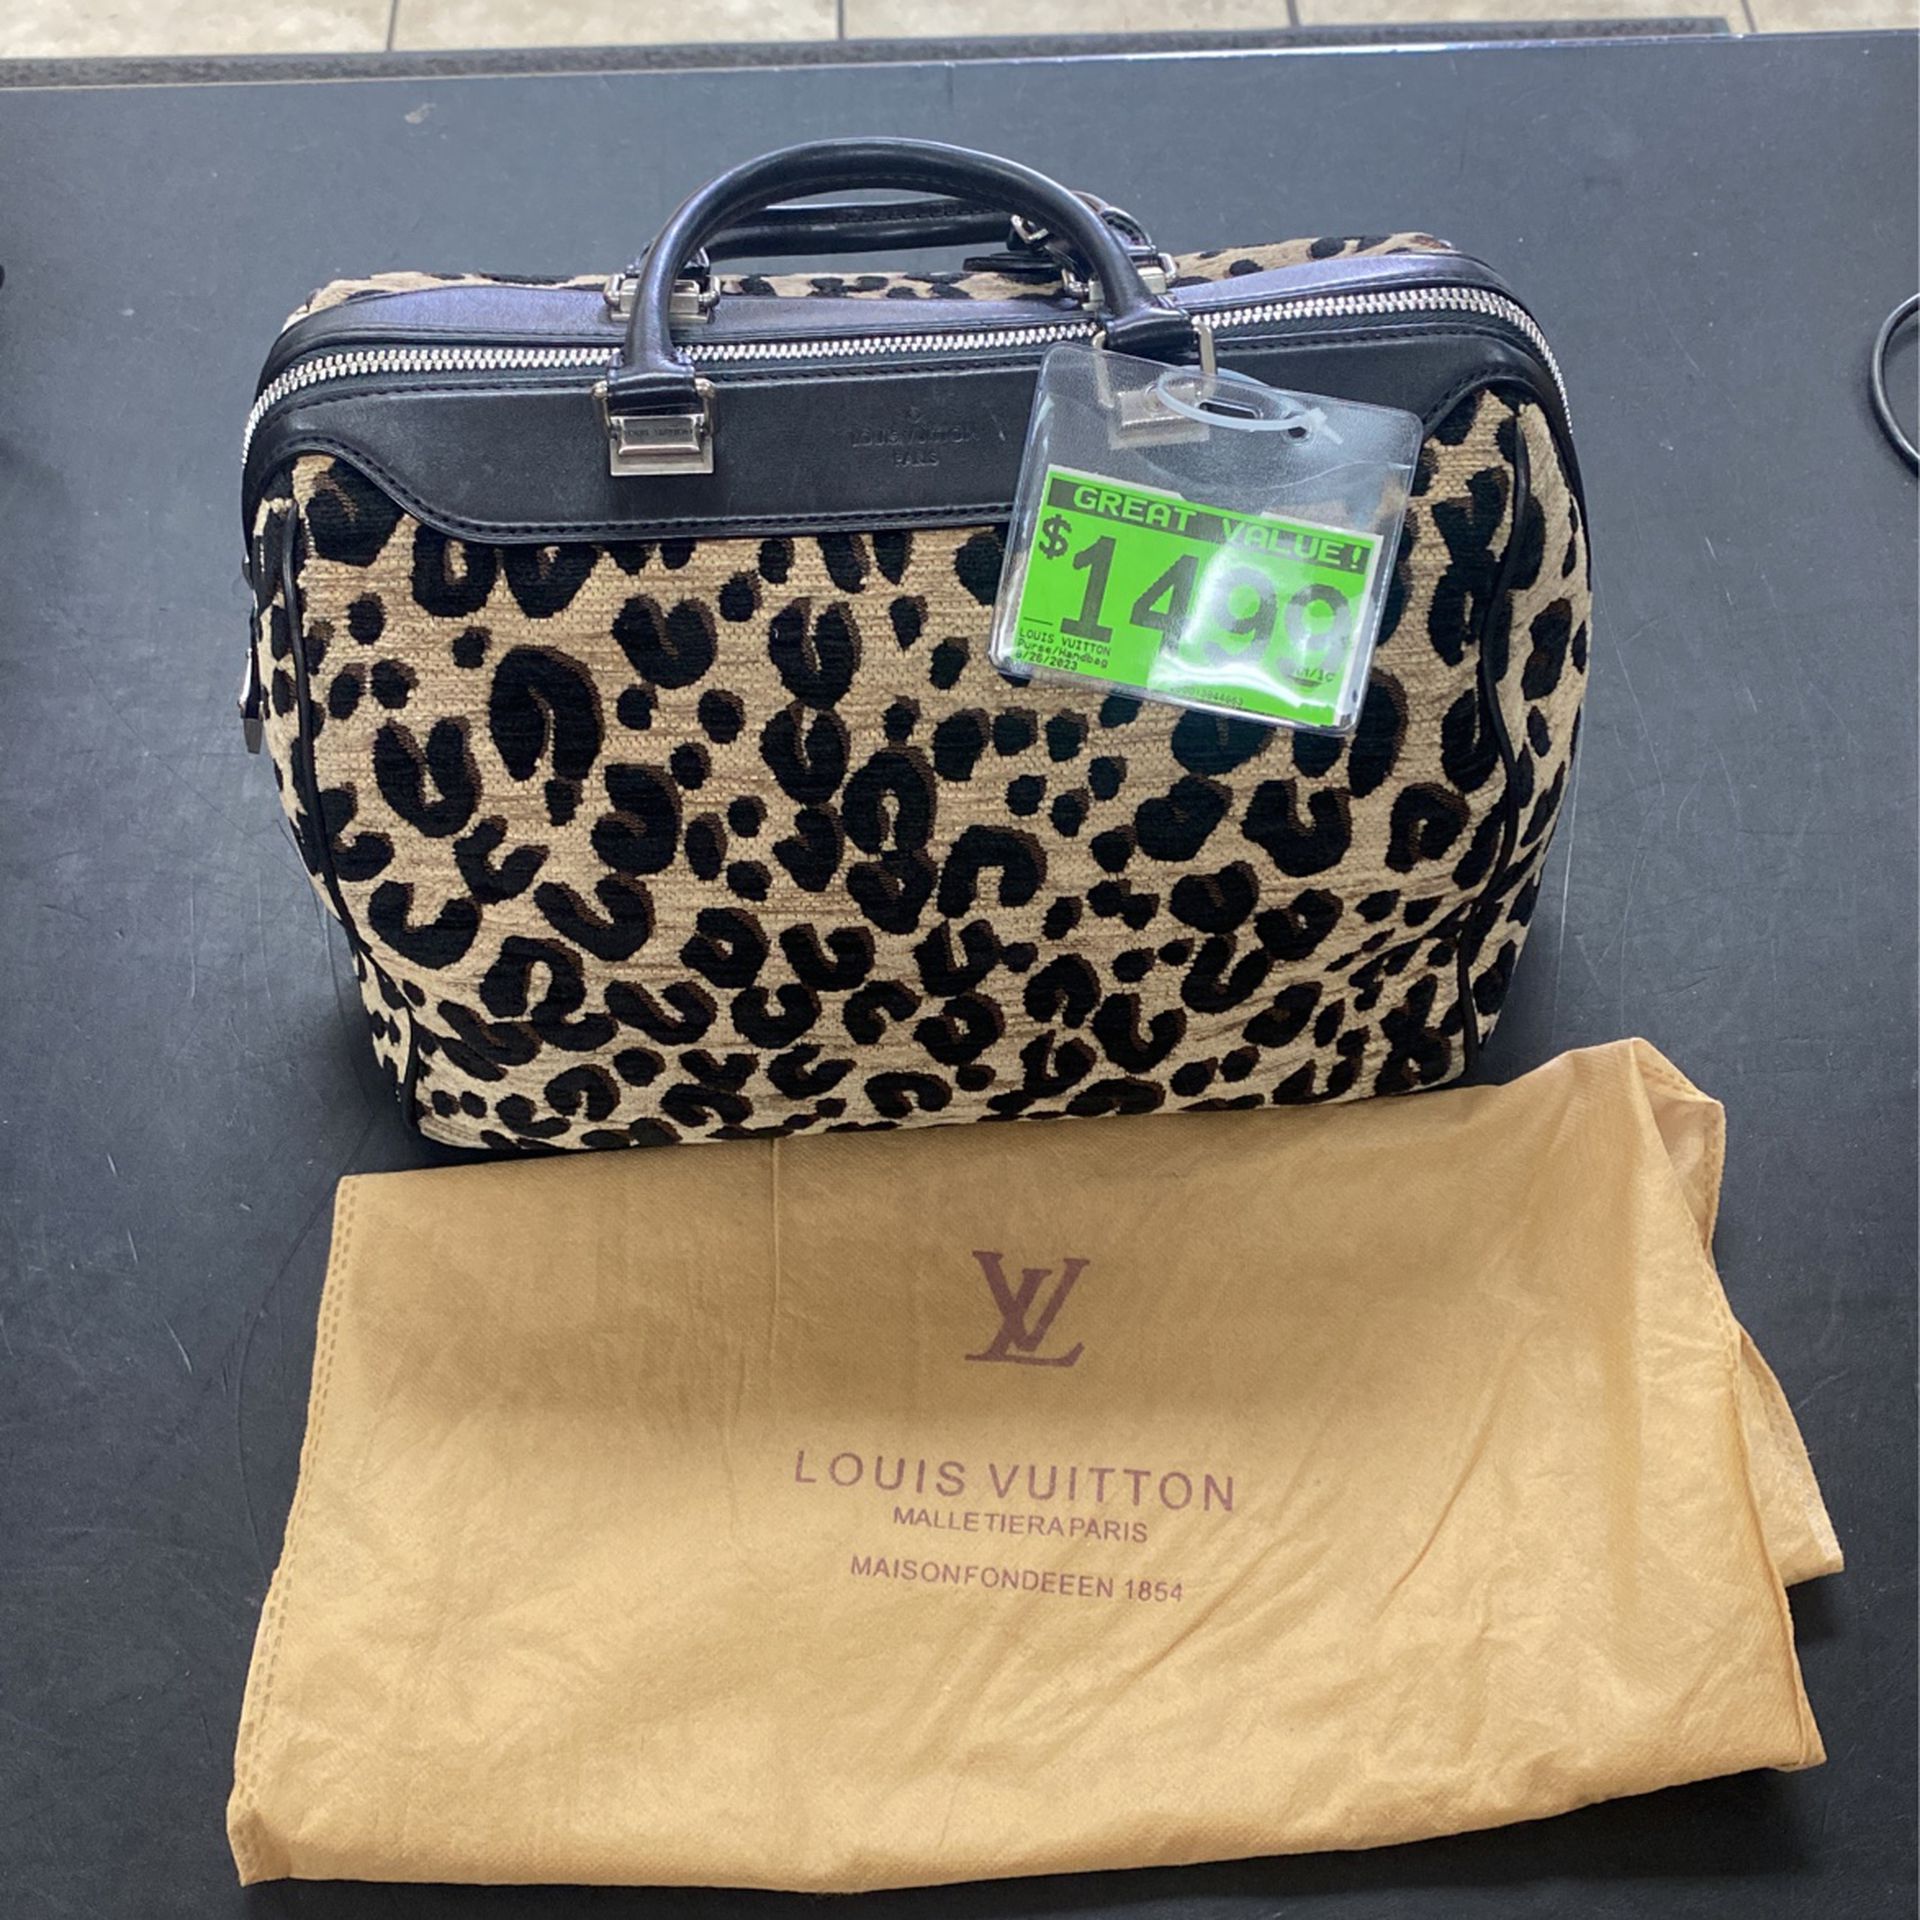 Louis Vuitton Speedy 30 Leopard Print Purse for Sale in Tucson, AZ - OfferUp